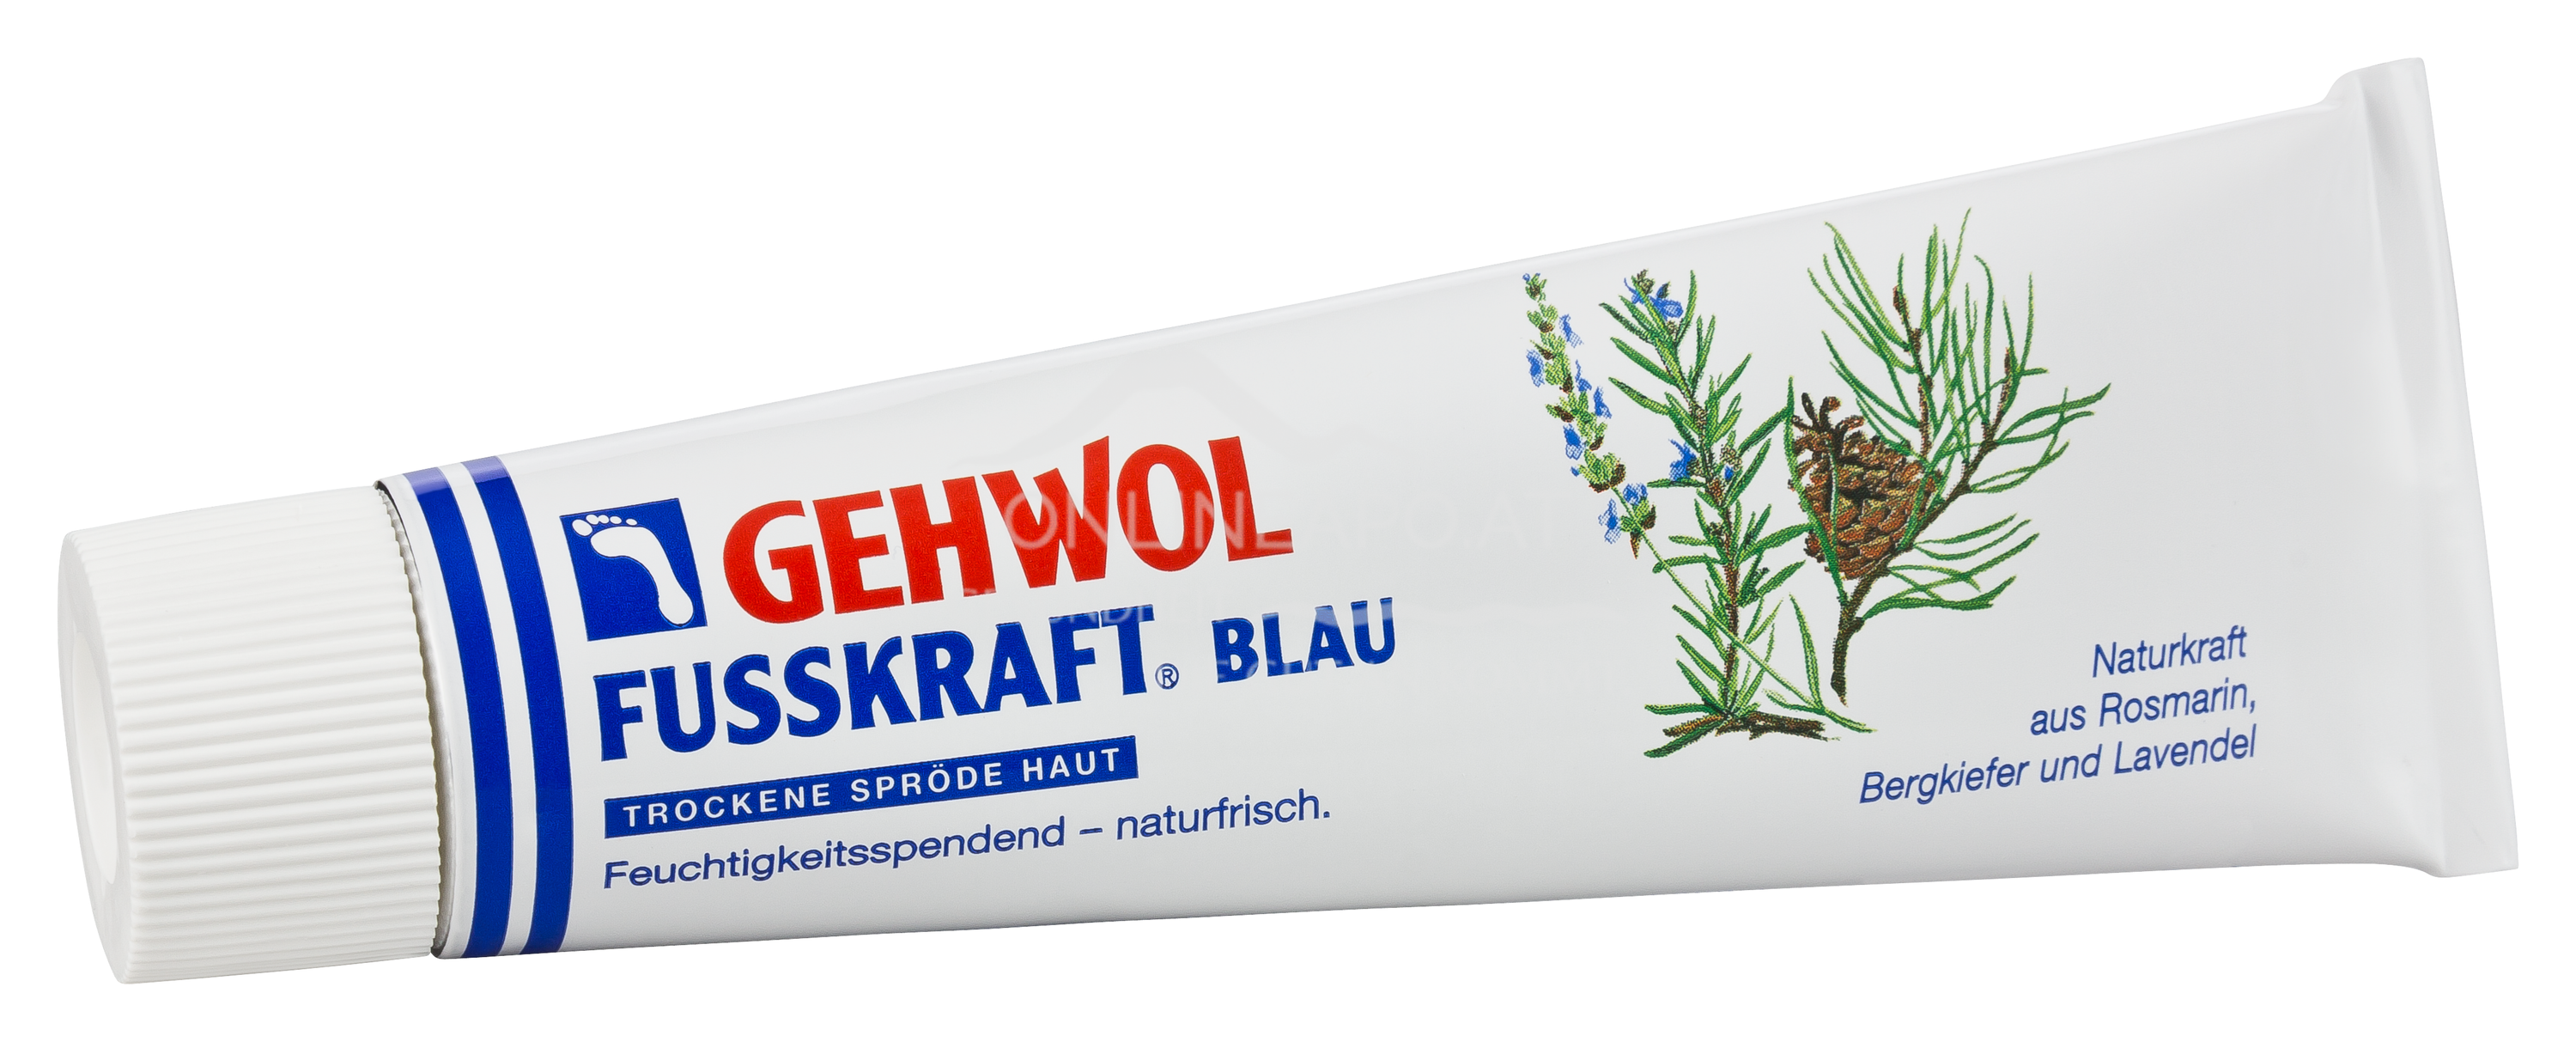 GEHWOL® FUSSKRAFT BLAU, trockene-spröde Haut